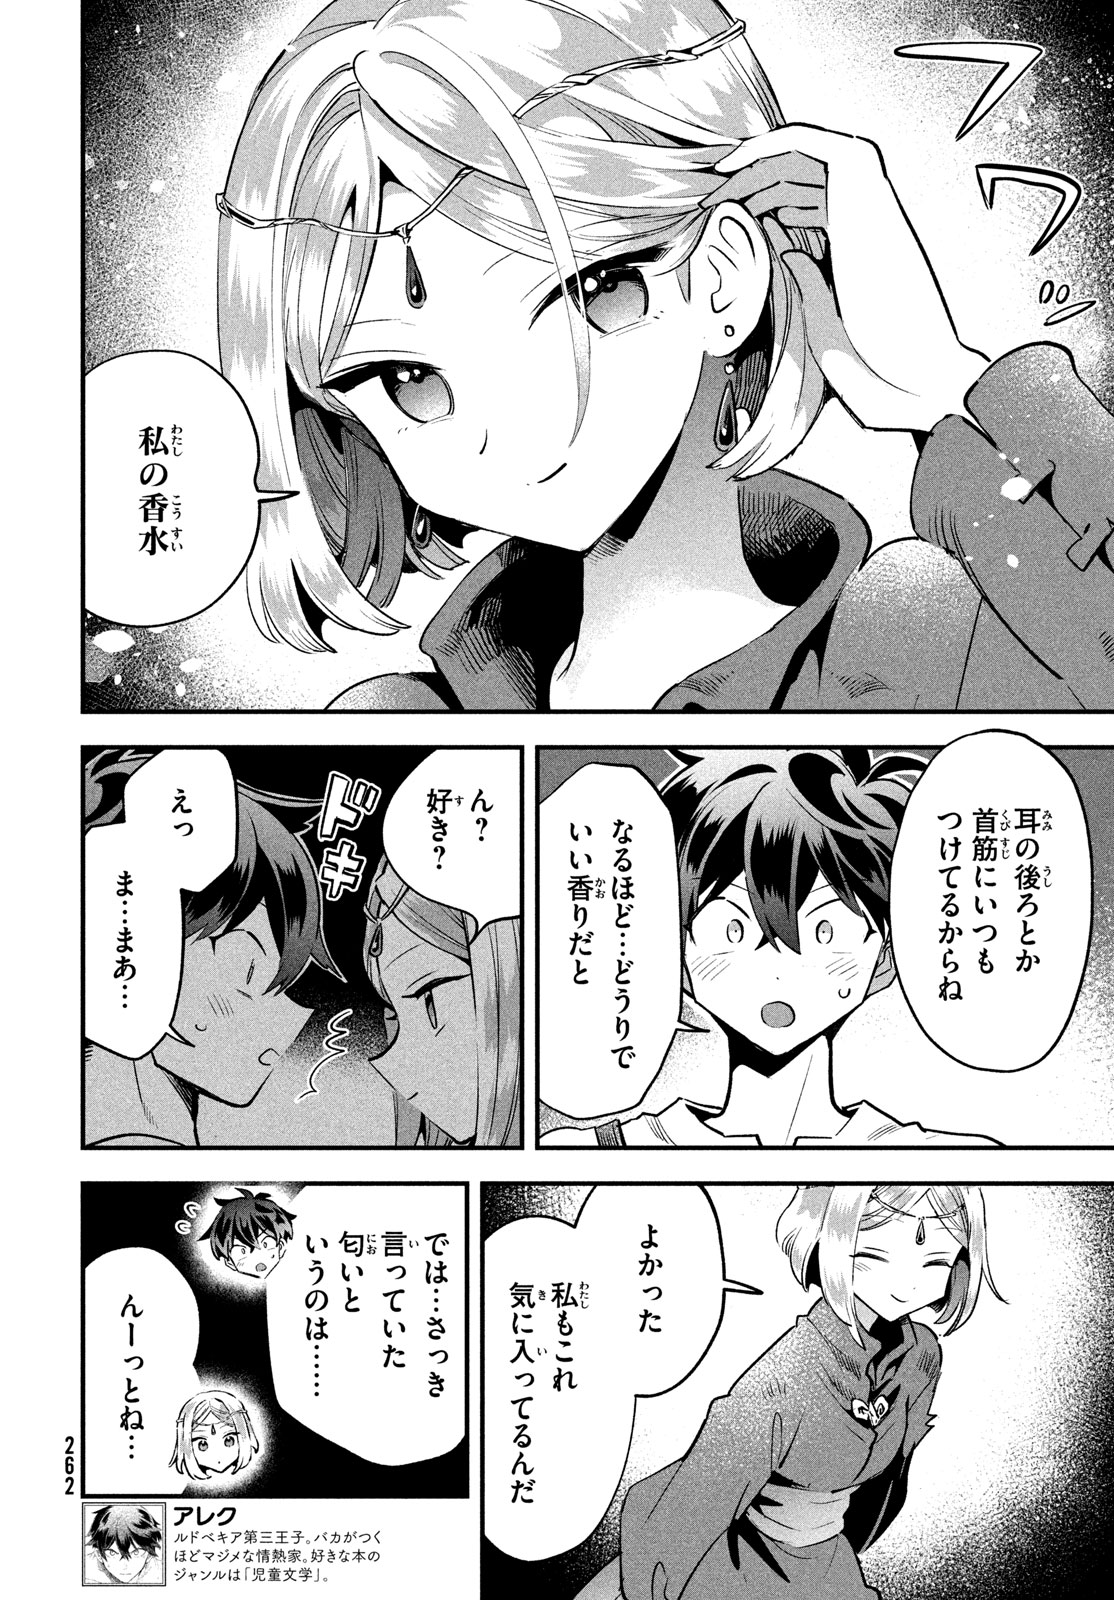 7-nin no Nemuri Hime - Chapter 39 - Page 2